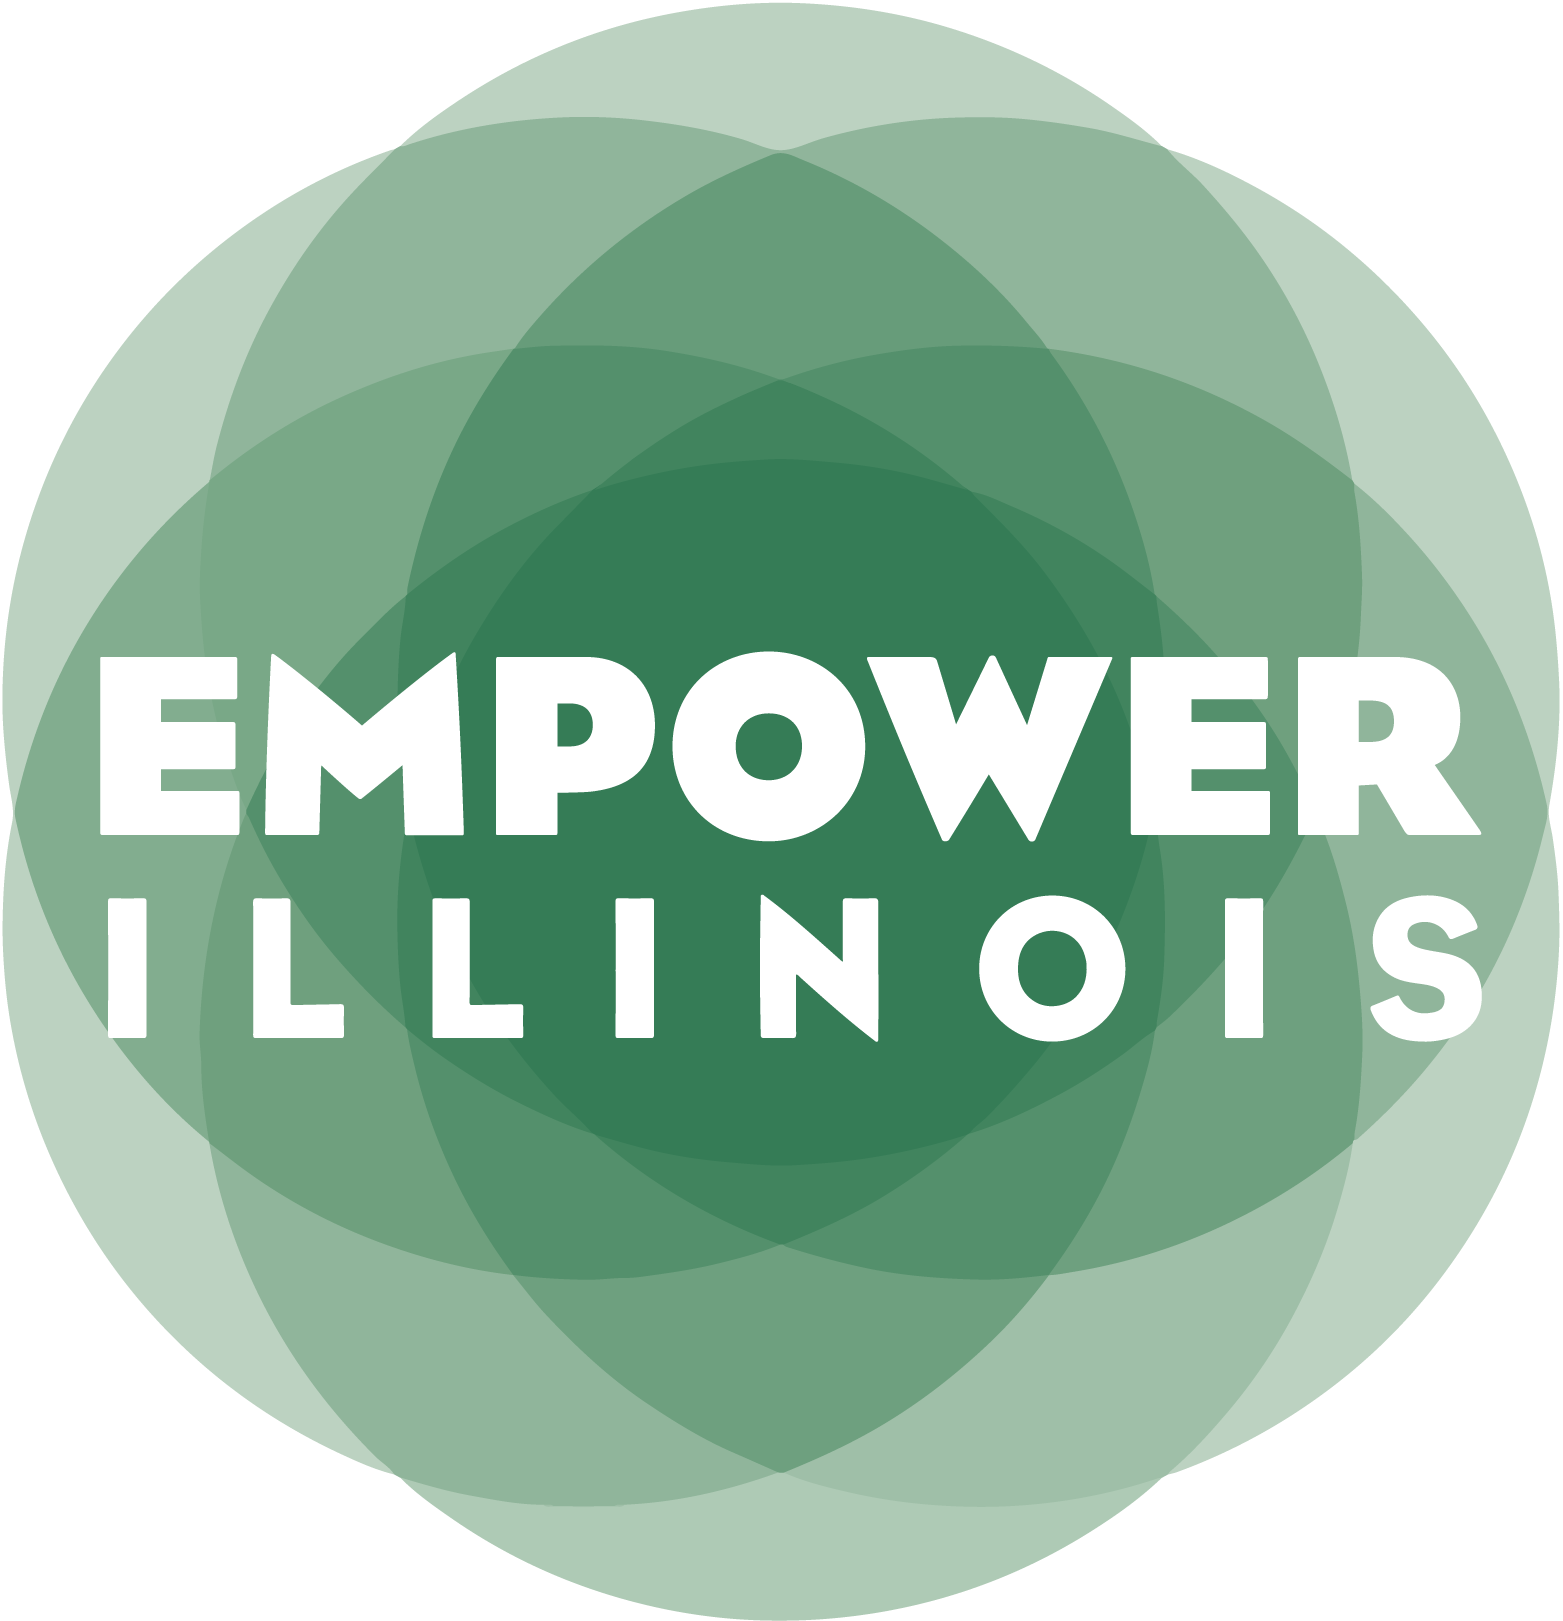 Empower Illinois